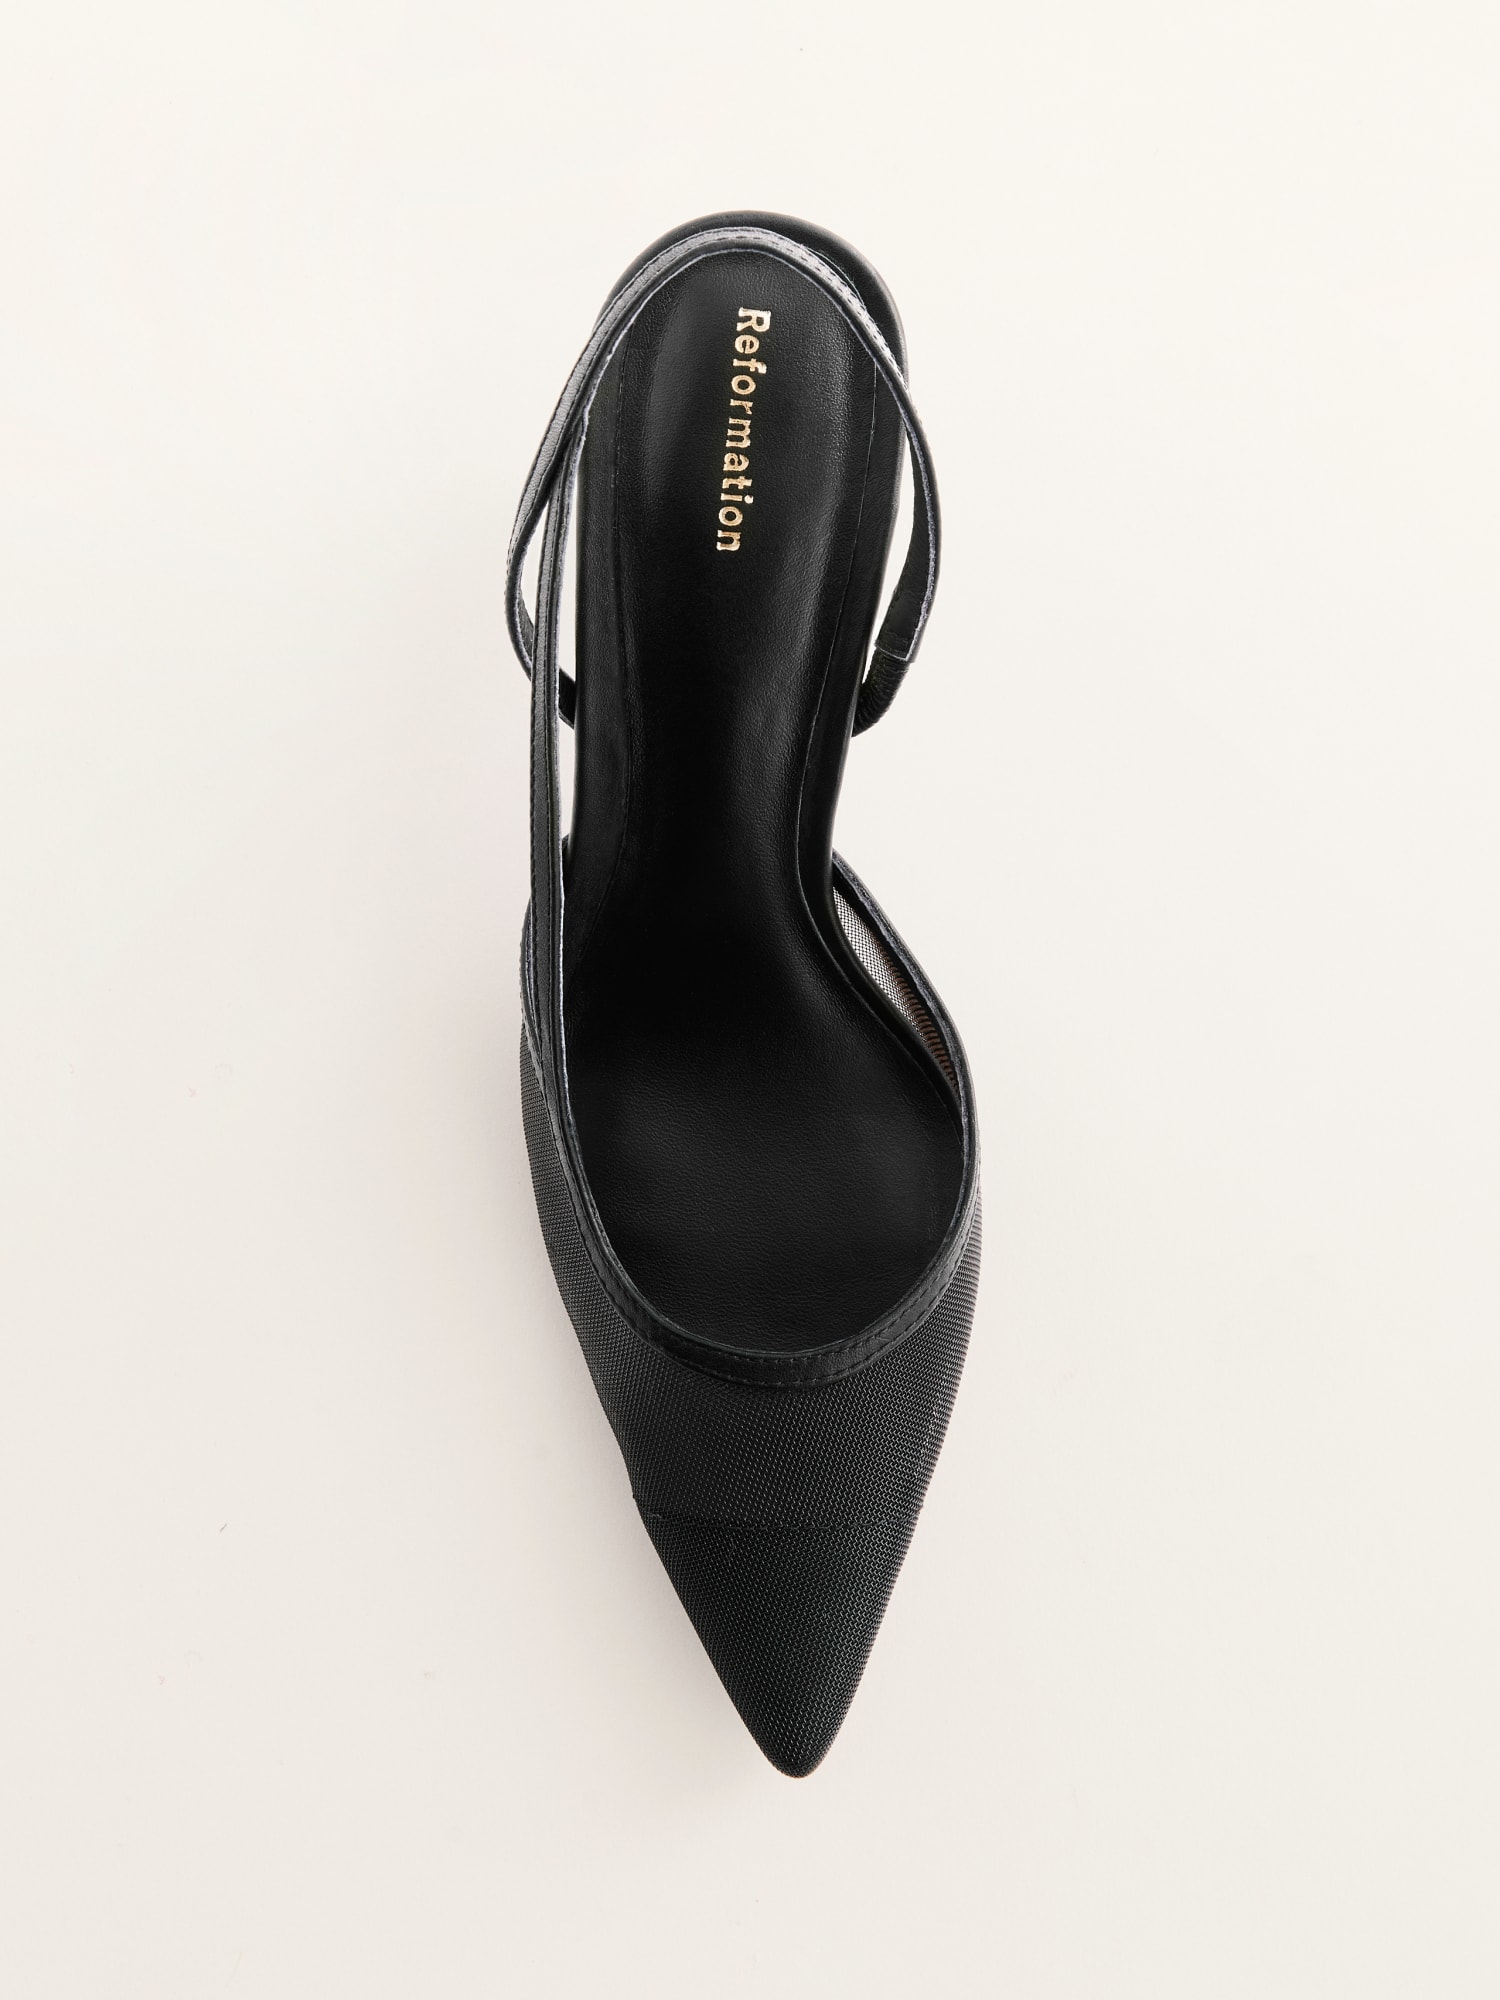 Whitnee Slingback Heels - Sustainable Shoes